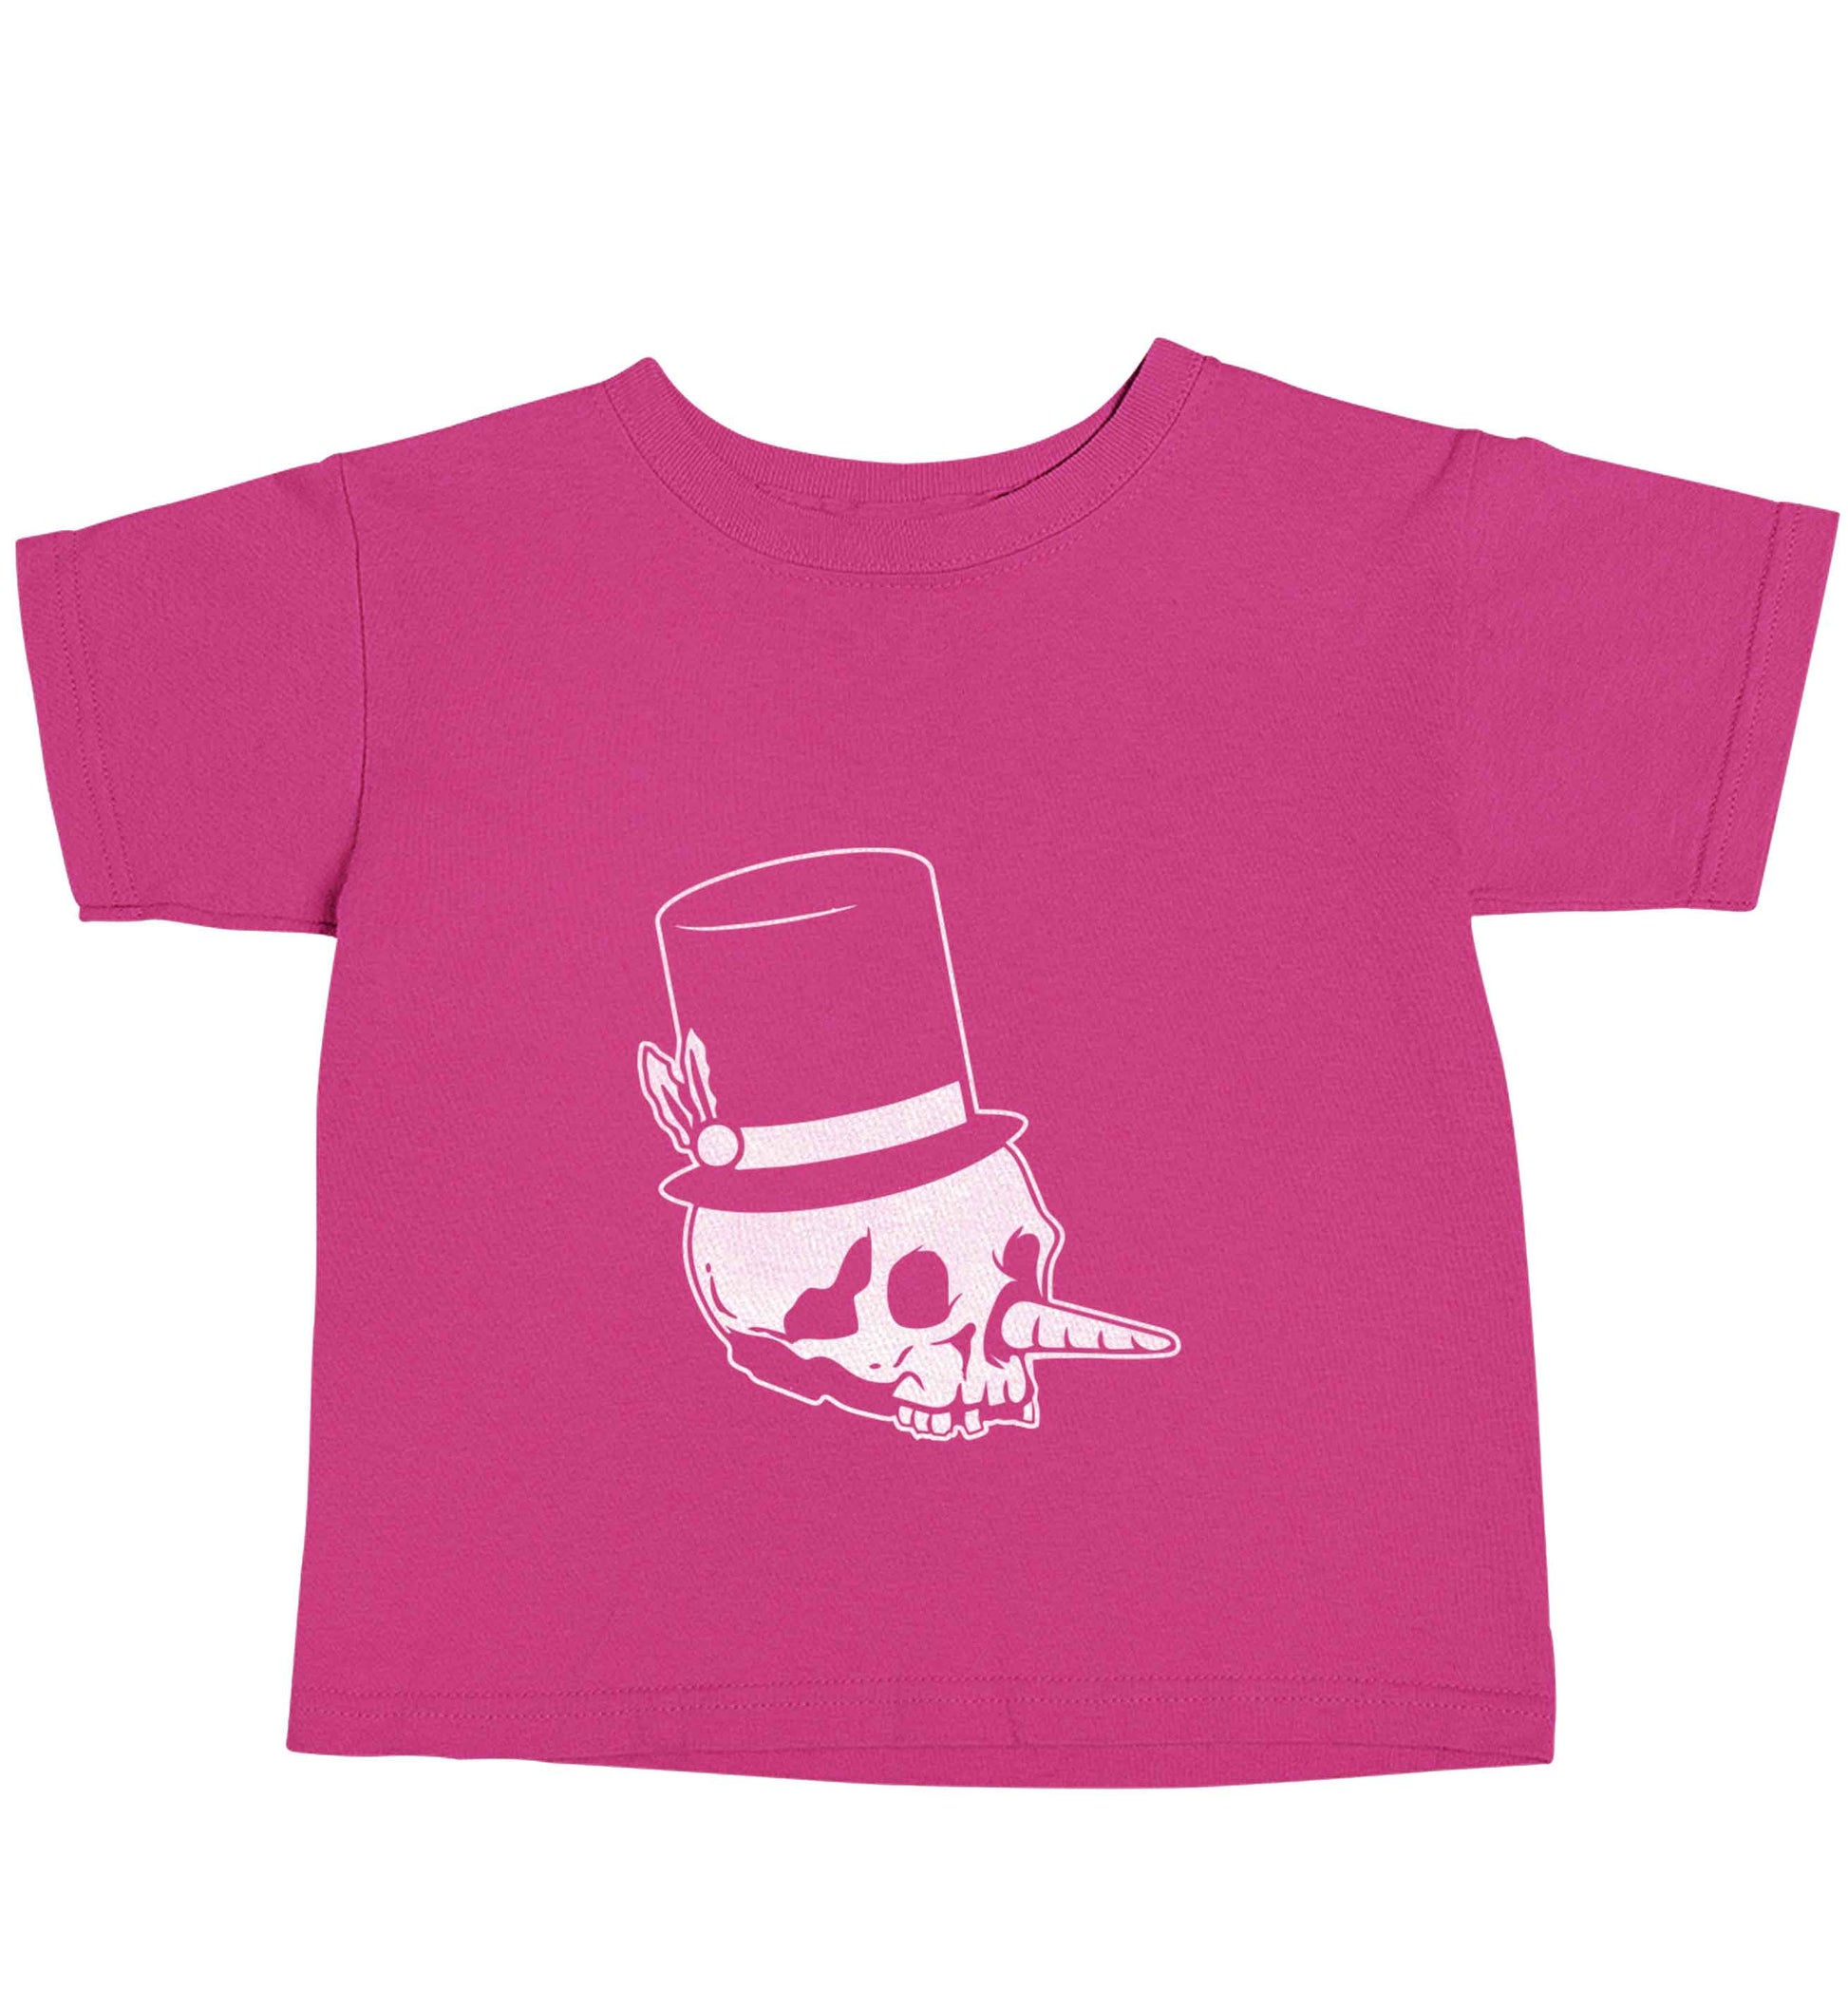 Snowman punk pink baby toddler Tshirt 2 Years